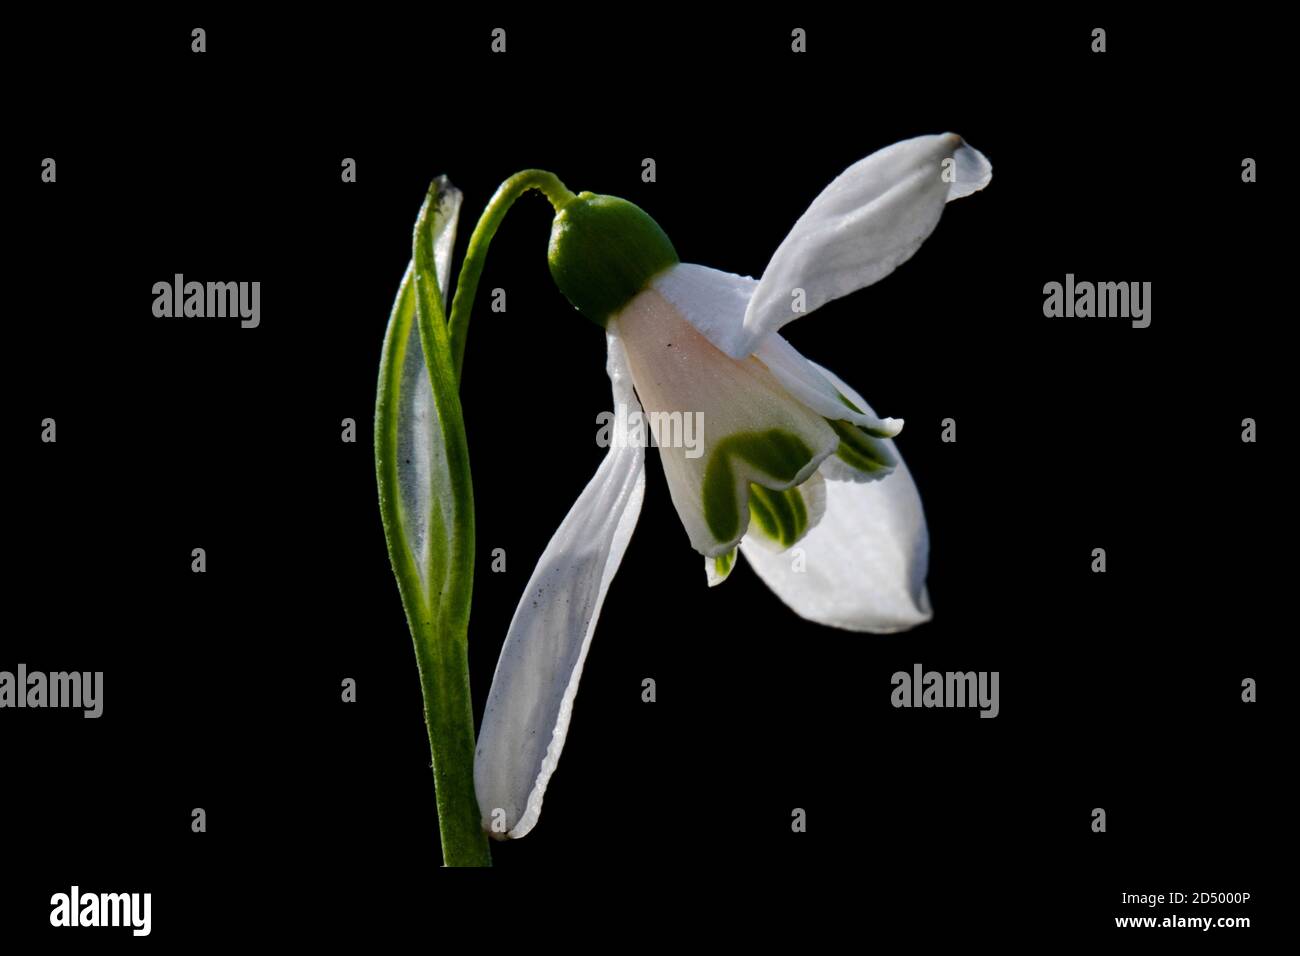 Woronow's snowdrop (Galanthus woronowii), flower against black background, Netherlands Stock Photo